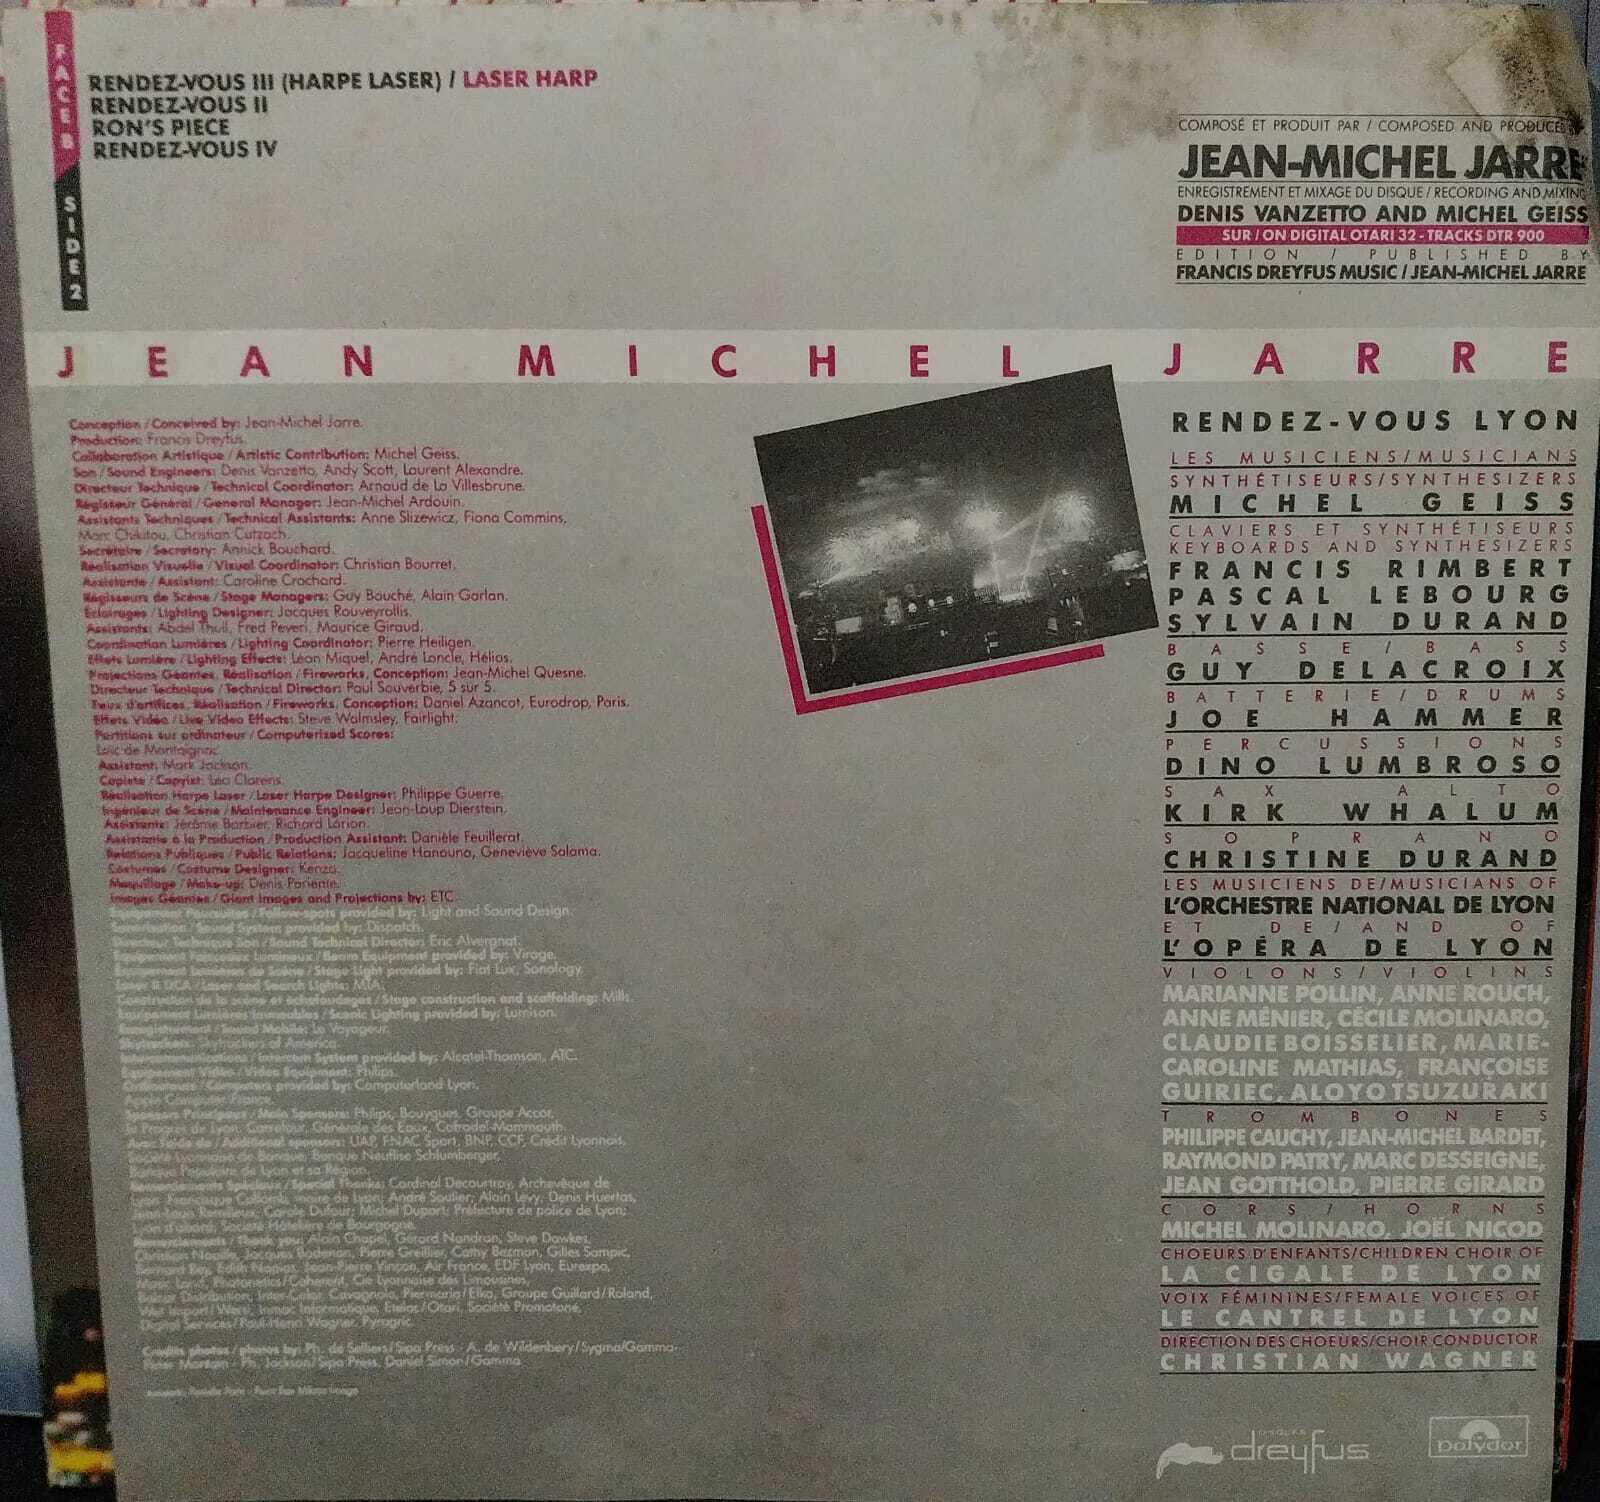 Vinil - Jean Michel Jarre - in Concert Houston Lyon